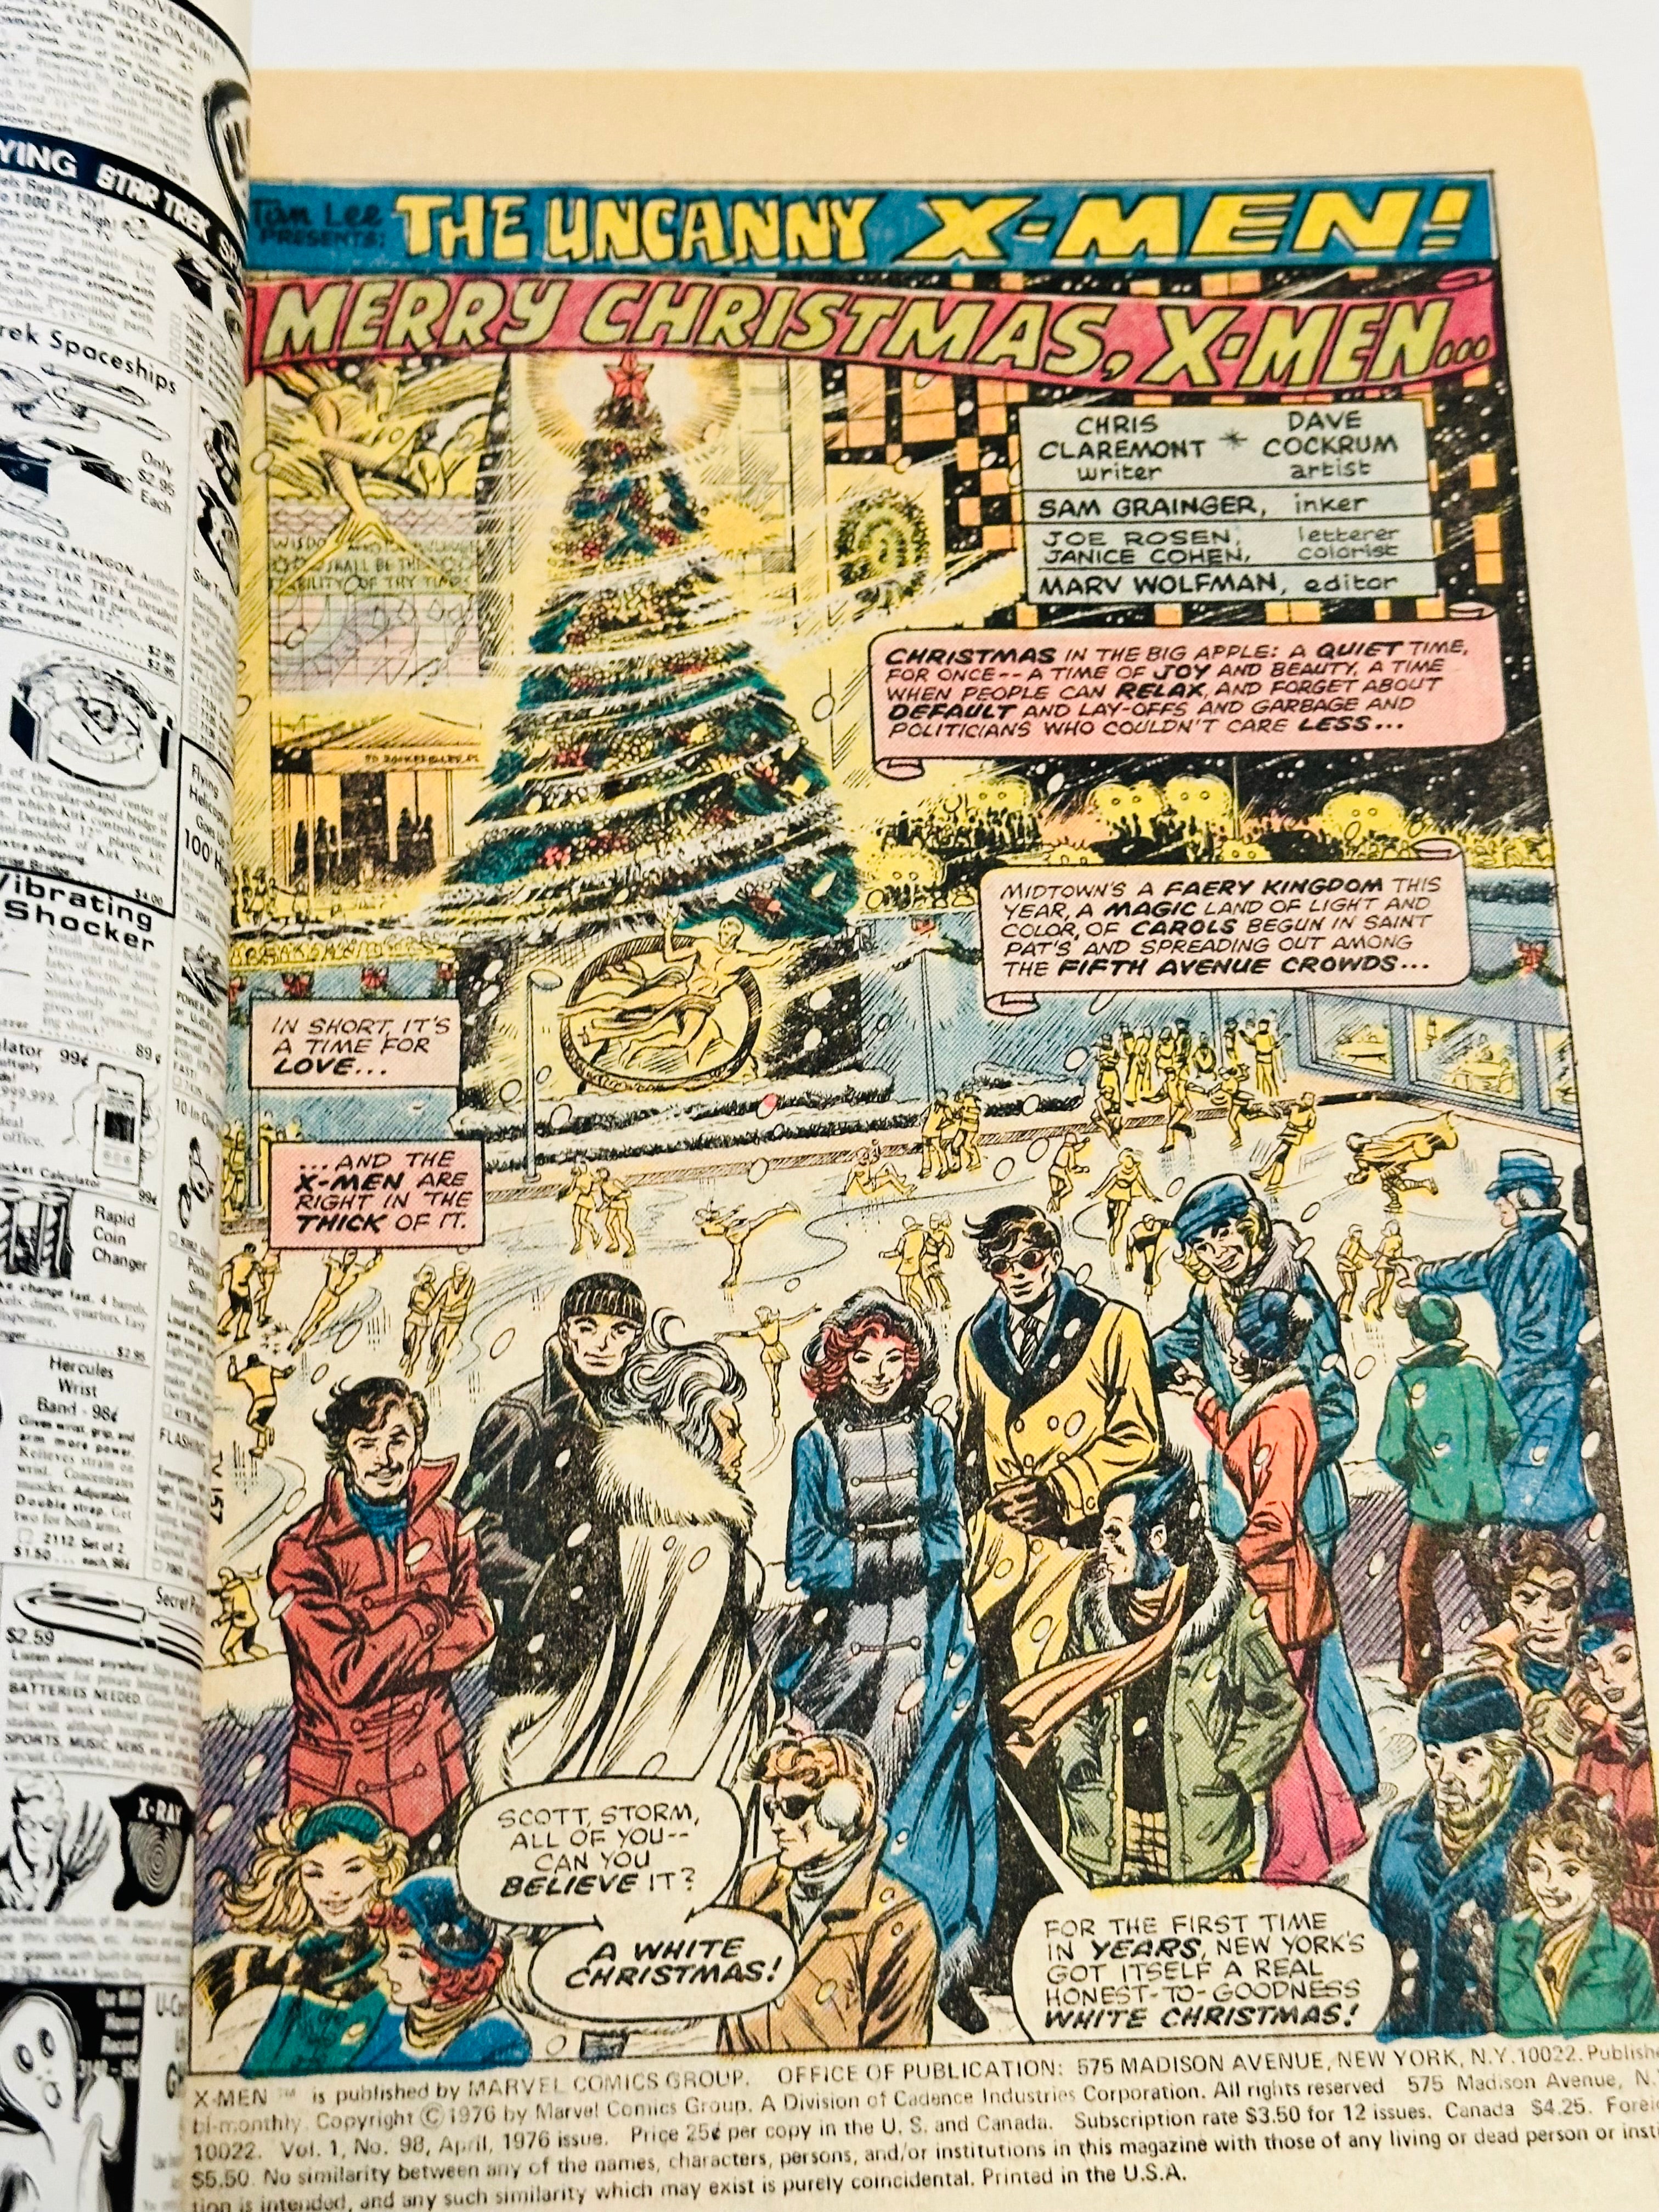 X-Men #98 high grade Vf or better condition vintage comic book 1976